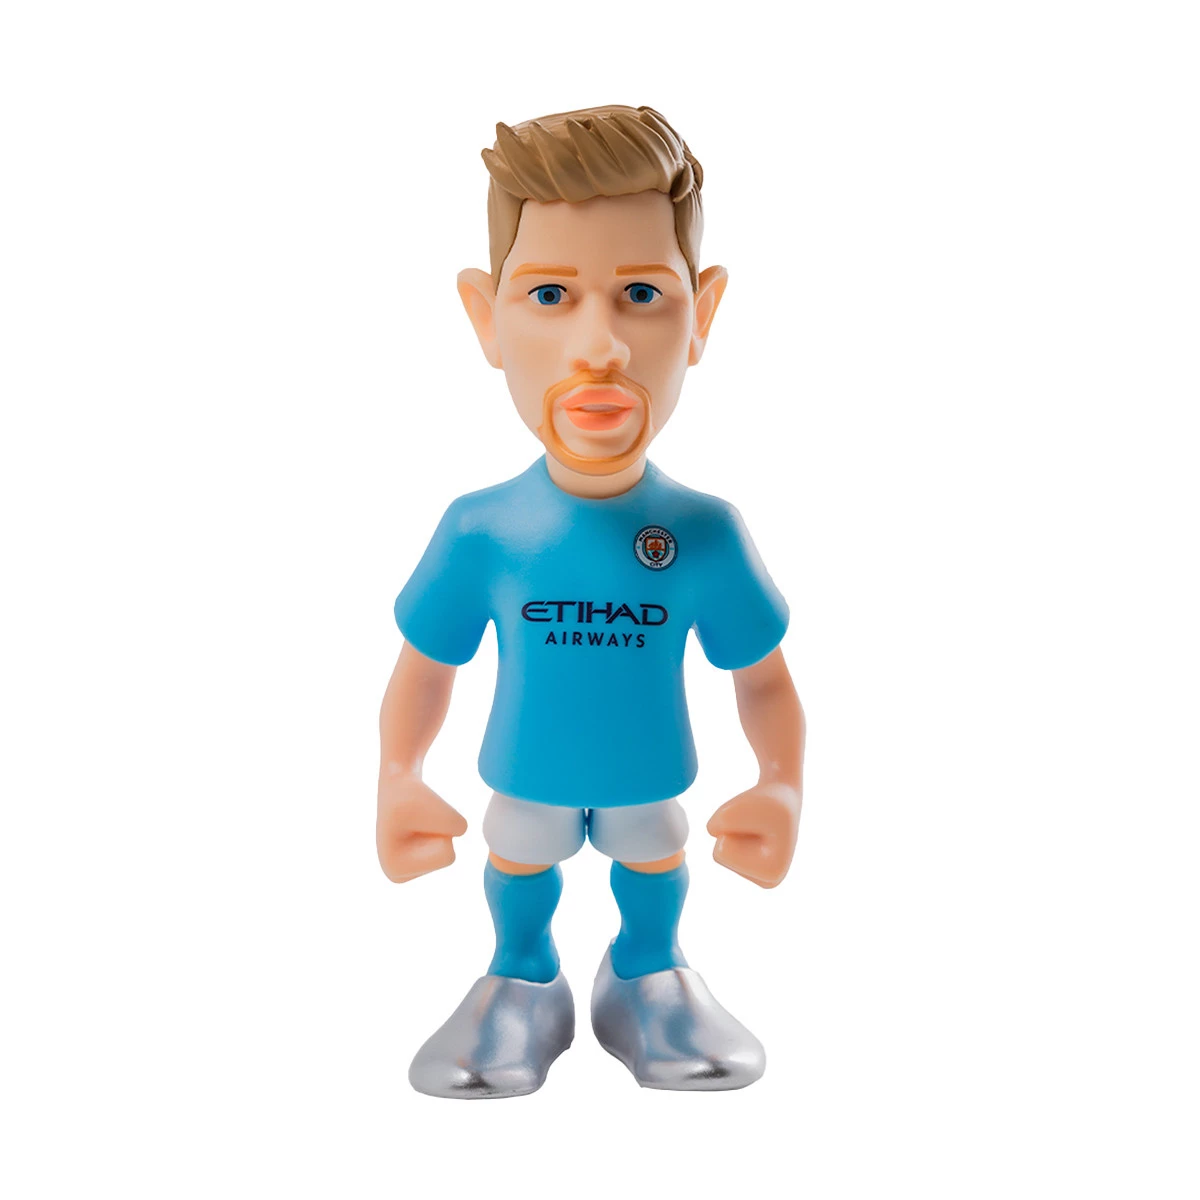 Banbo Toys Manchester City Minix DeBruyne 12cm Figure